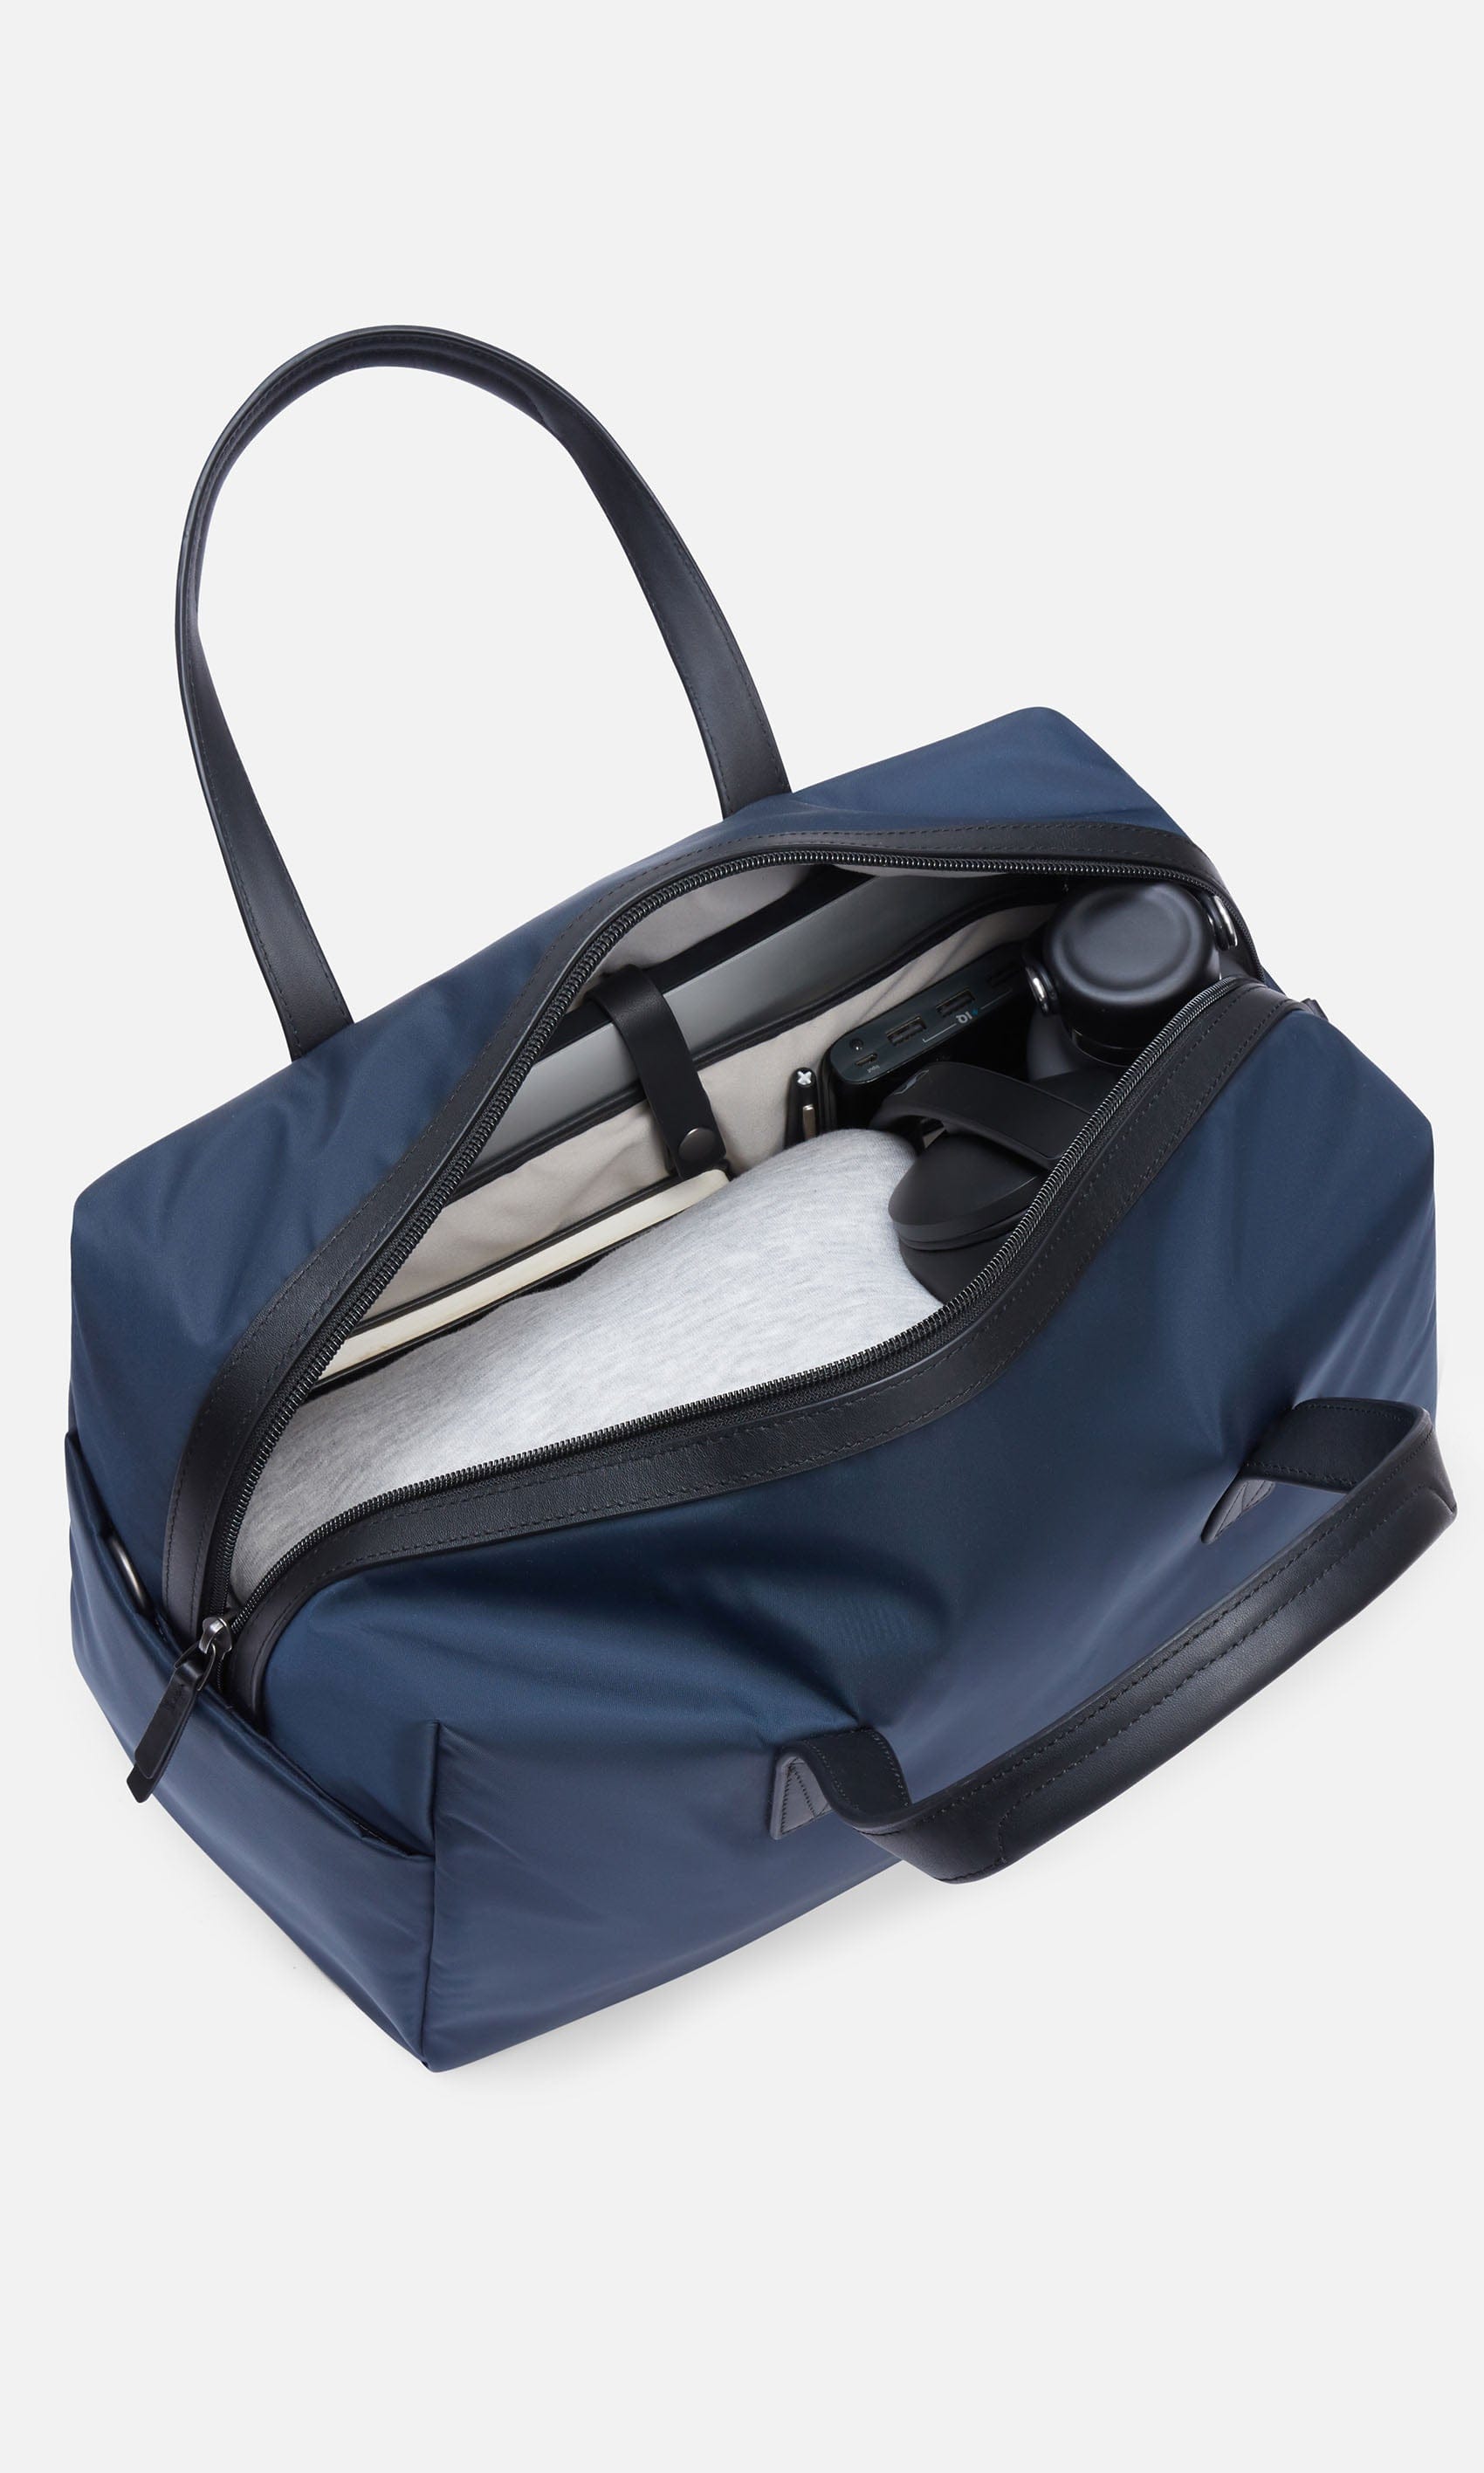 Antler Luggage -  Chelsea overnight bag in navy - Overnight Bags Chelsea Overnight Bag Navy | Lifestyle Bags | Antler UK